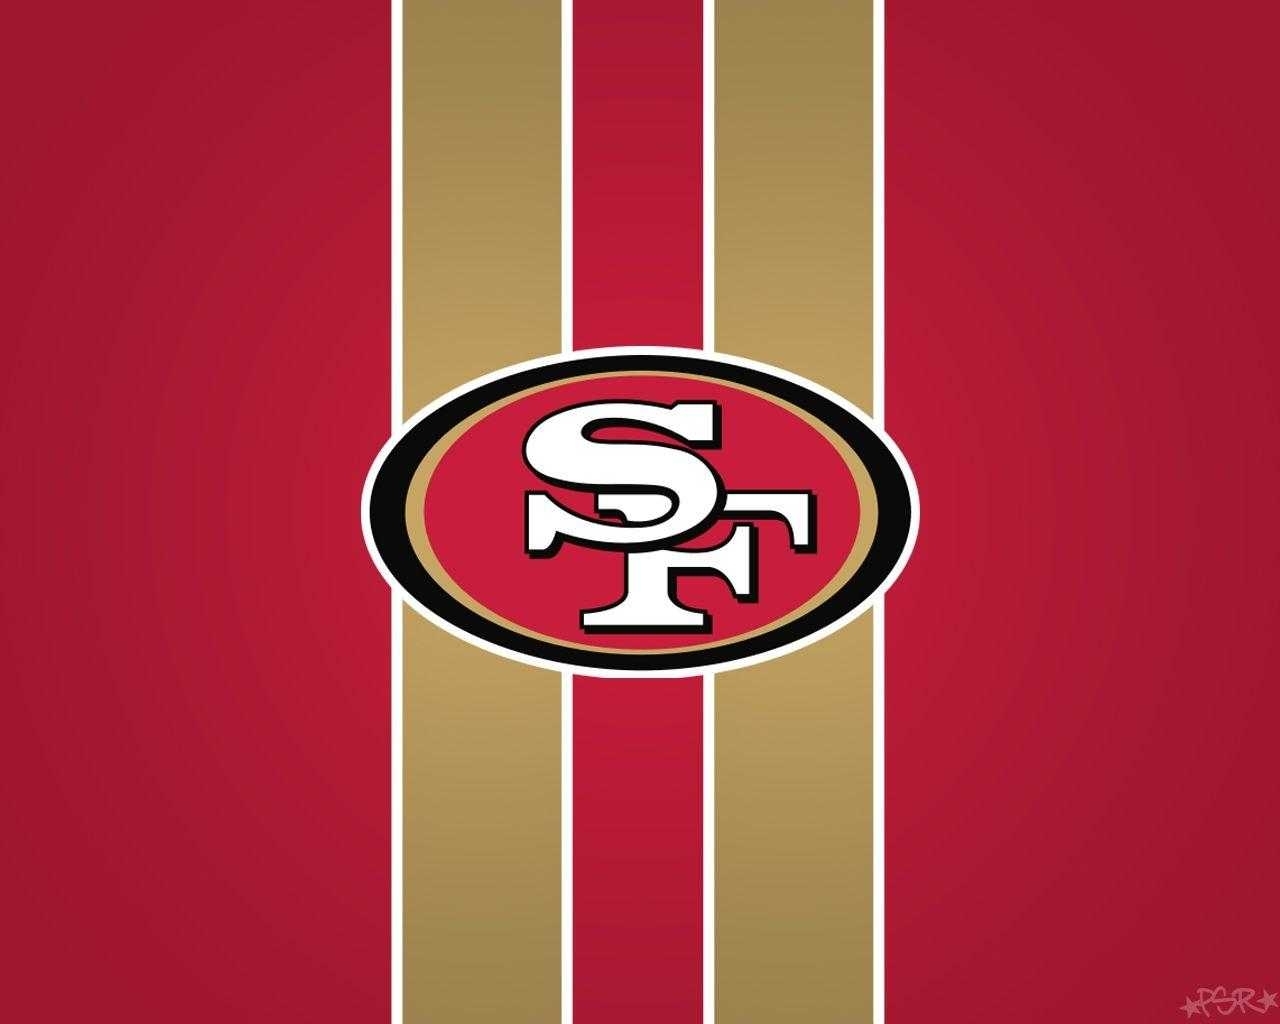 49 page. SF 49 ers. San Francisco 49ers участники. San Francisco 49ers logo. Sf49.